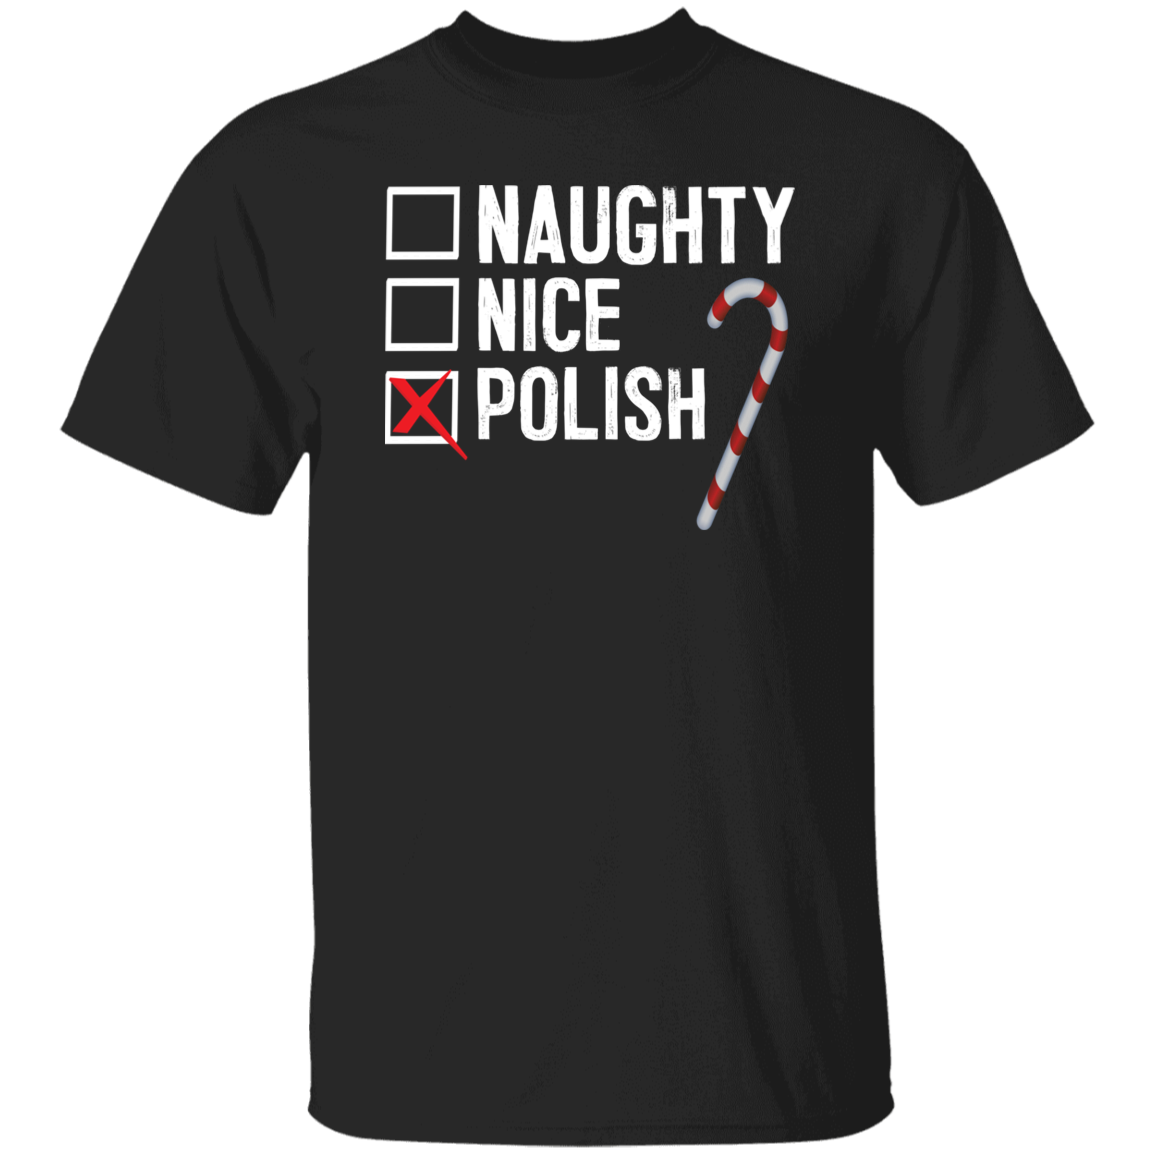 Polish Naughty Or Nice List Apparel CustomCat G500 5.3 oz. T-Shirt Black S